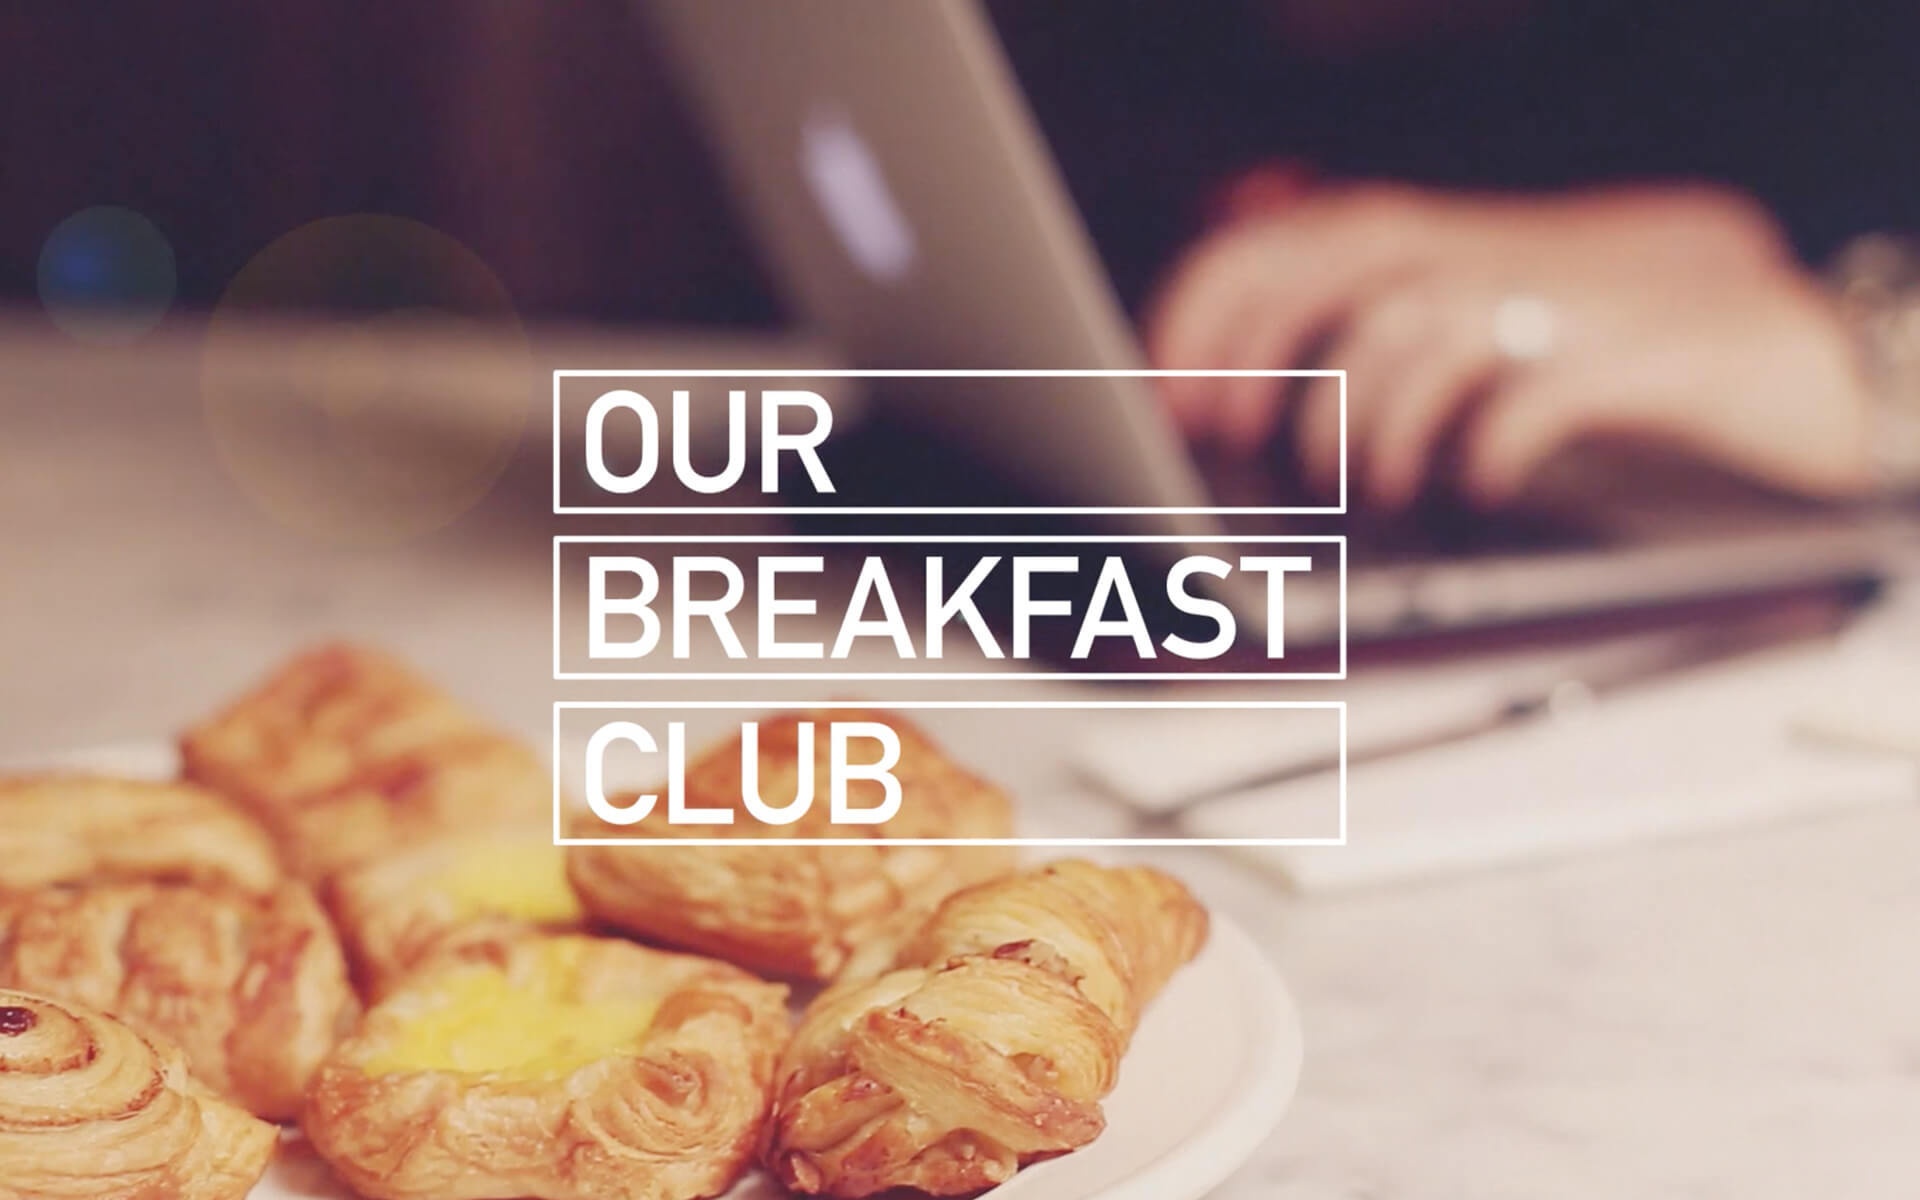 Our Breakfast Club